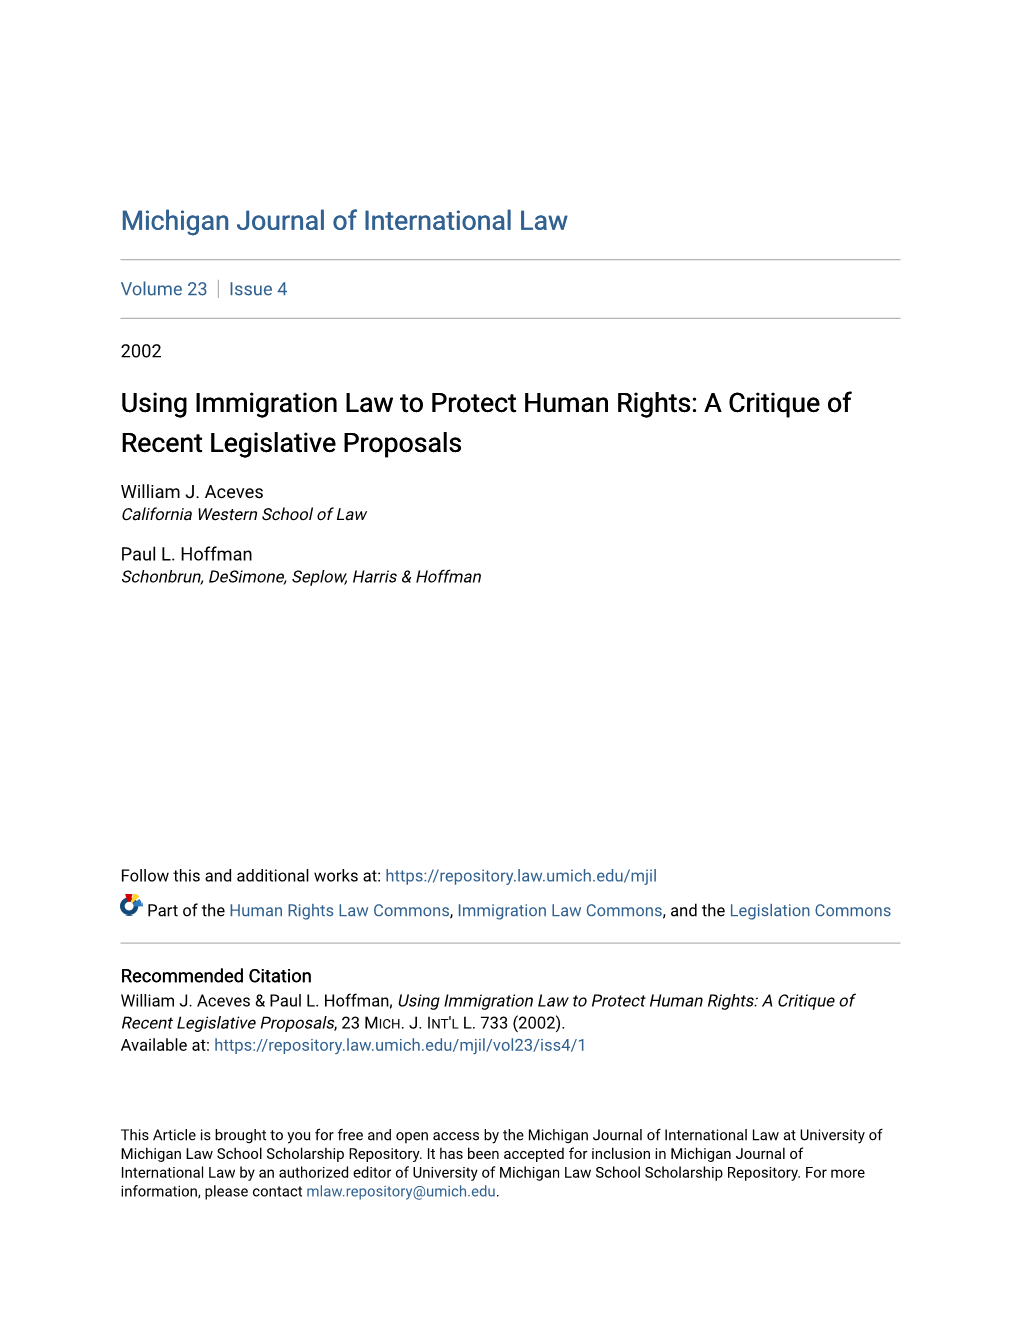 Using Immigration Law to Protect Human Rights: a Critique of Recent Legislative Proposals